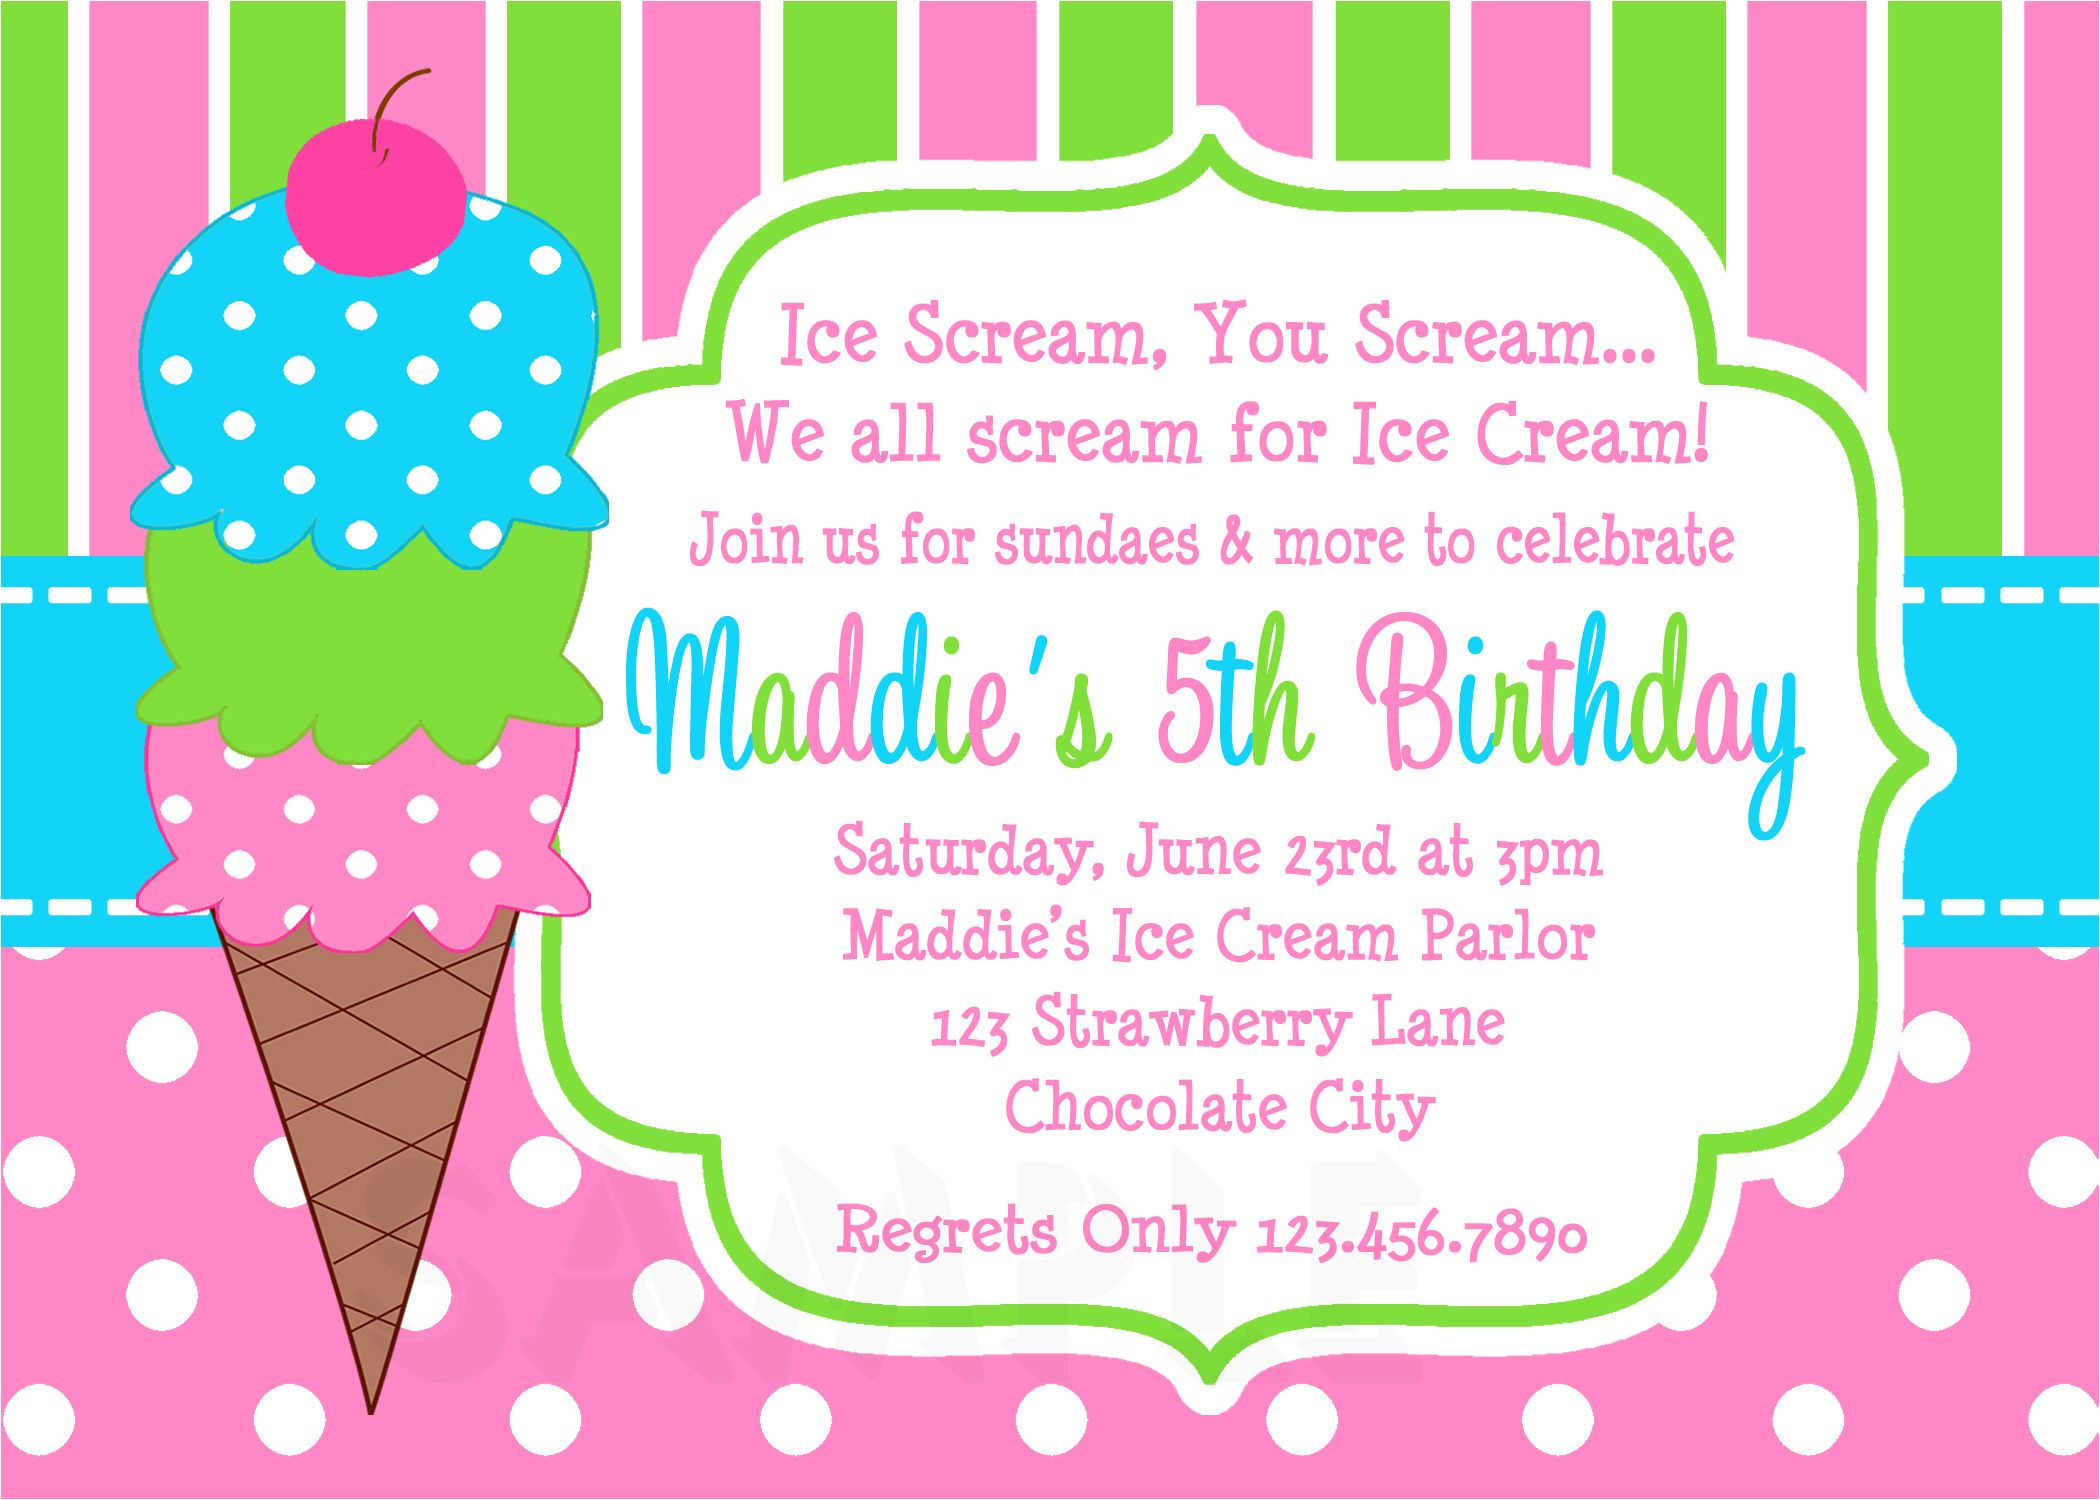 ice cream birthday party invitations pink green